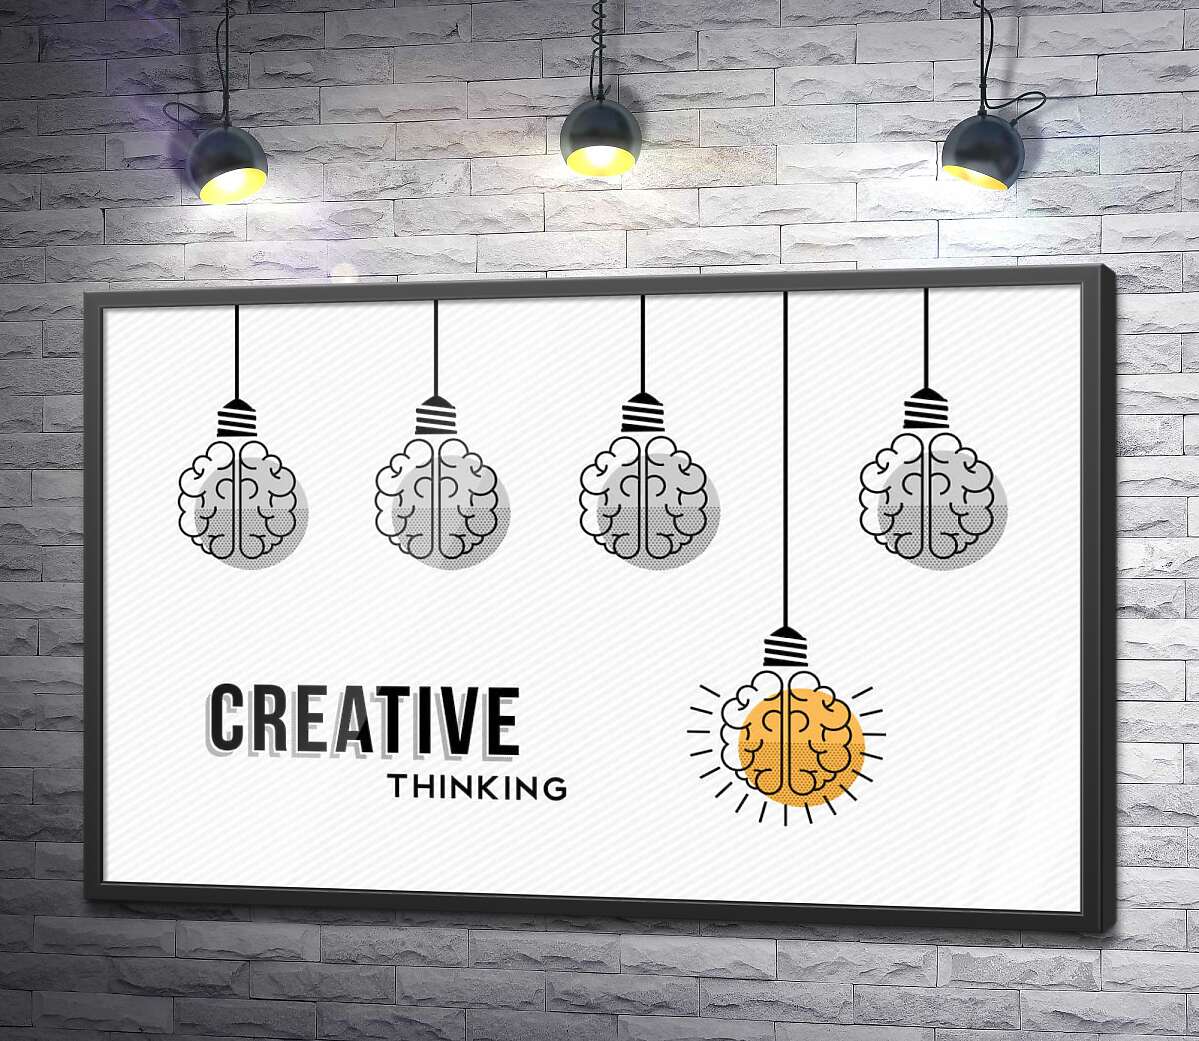 постер Гирлянда из лампочек над фразой "creative thinking"